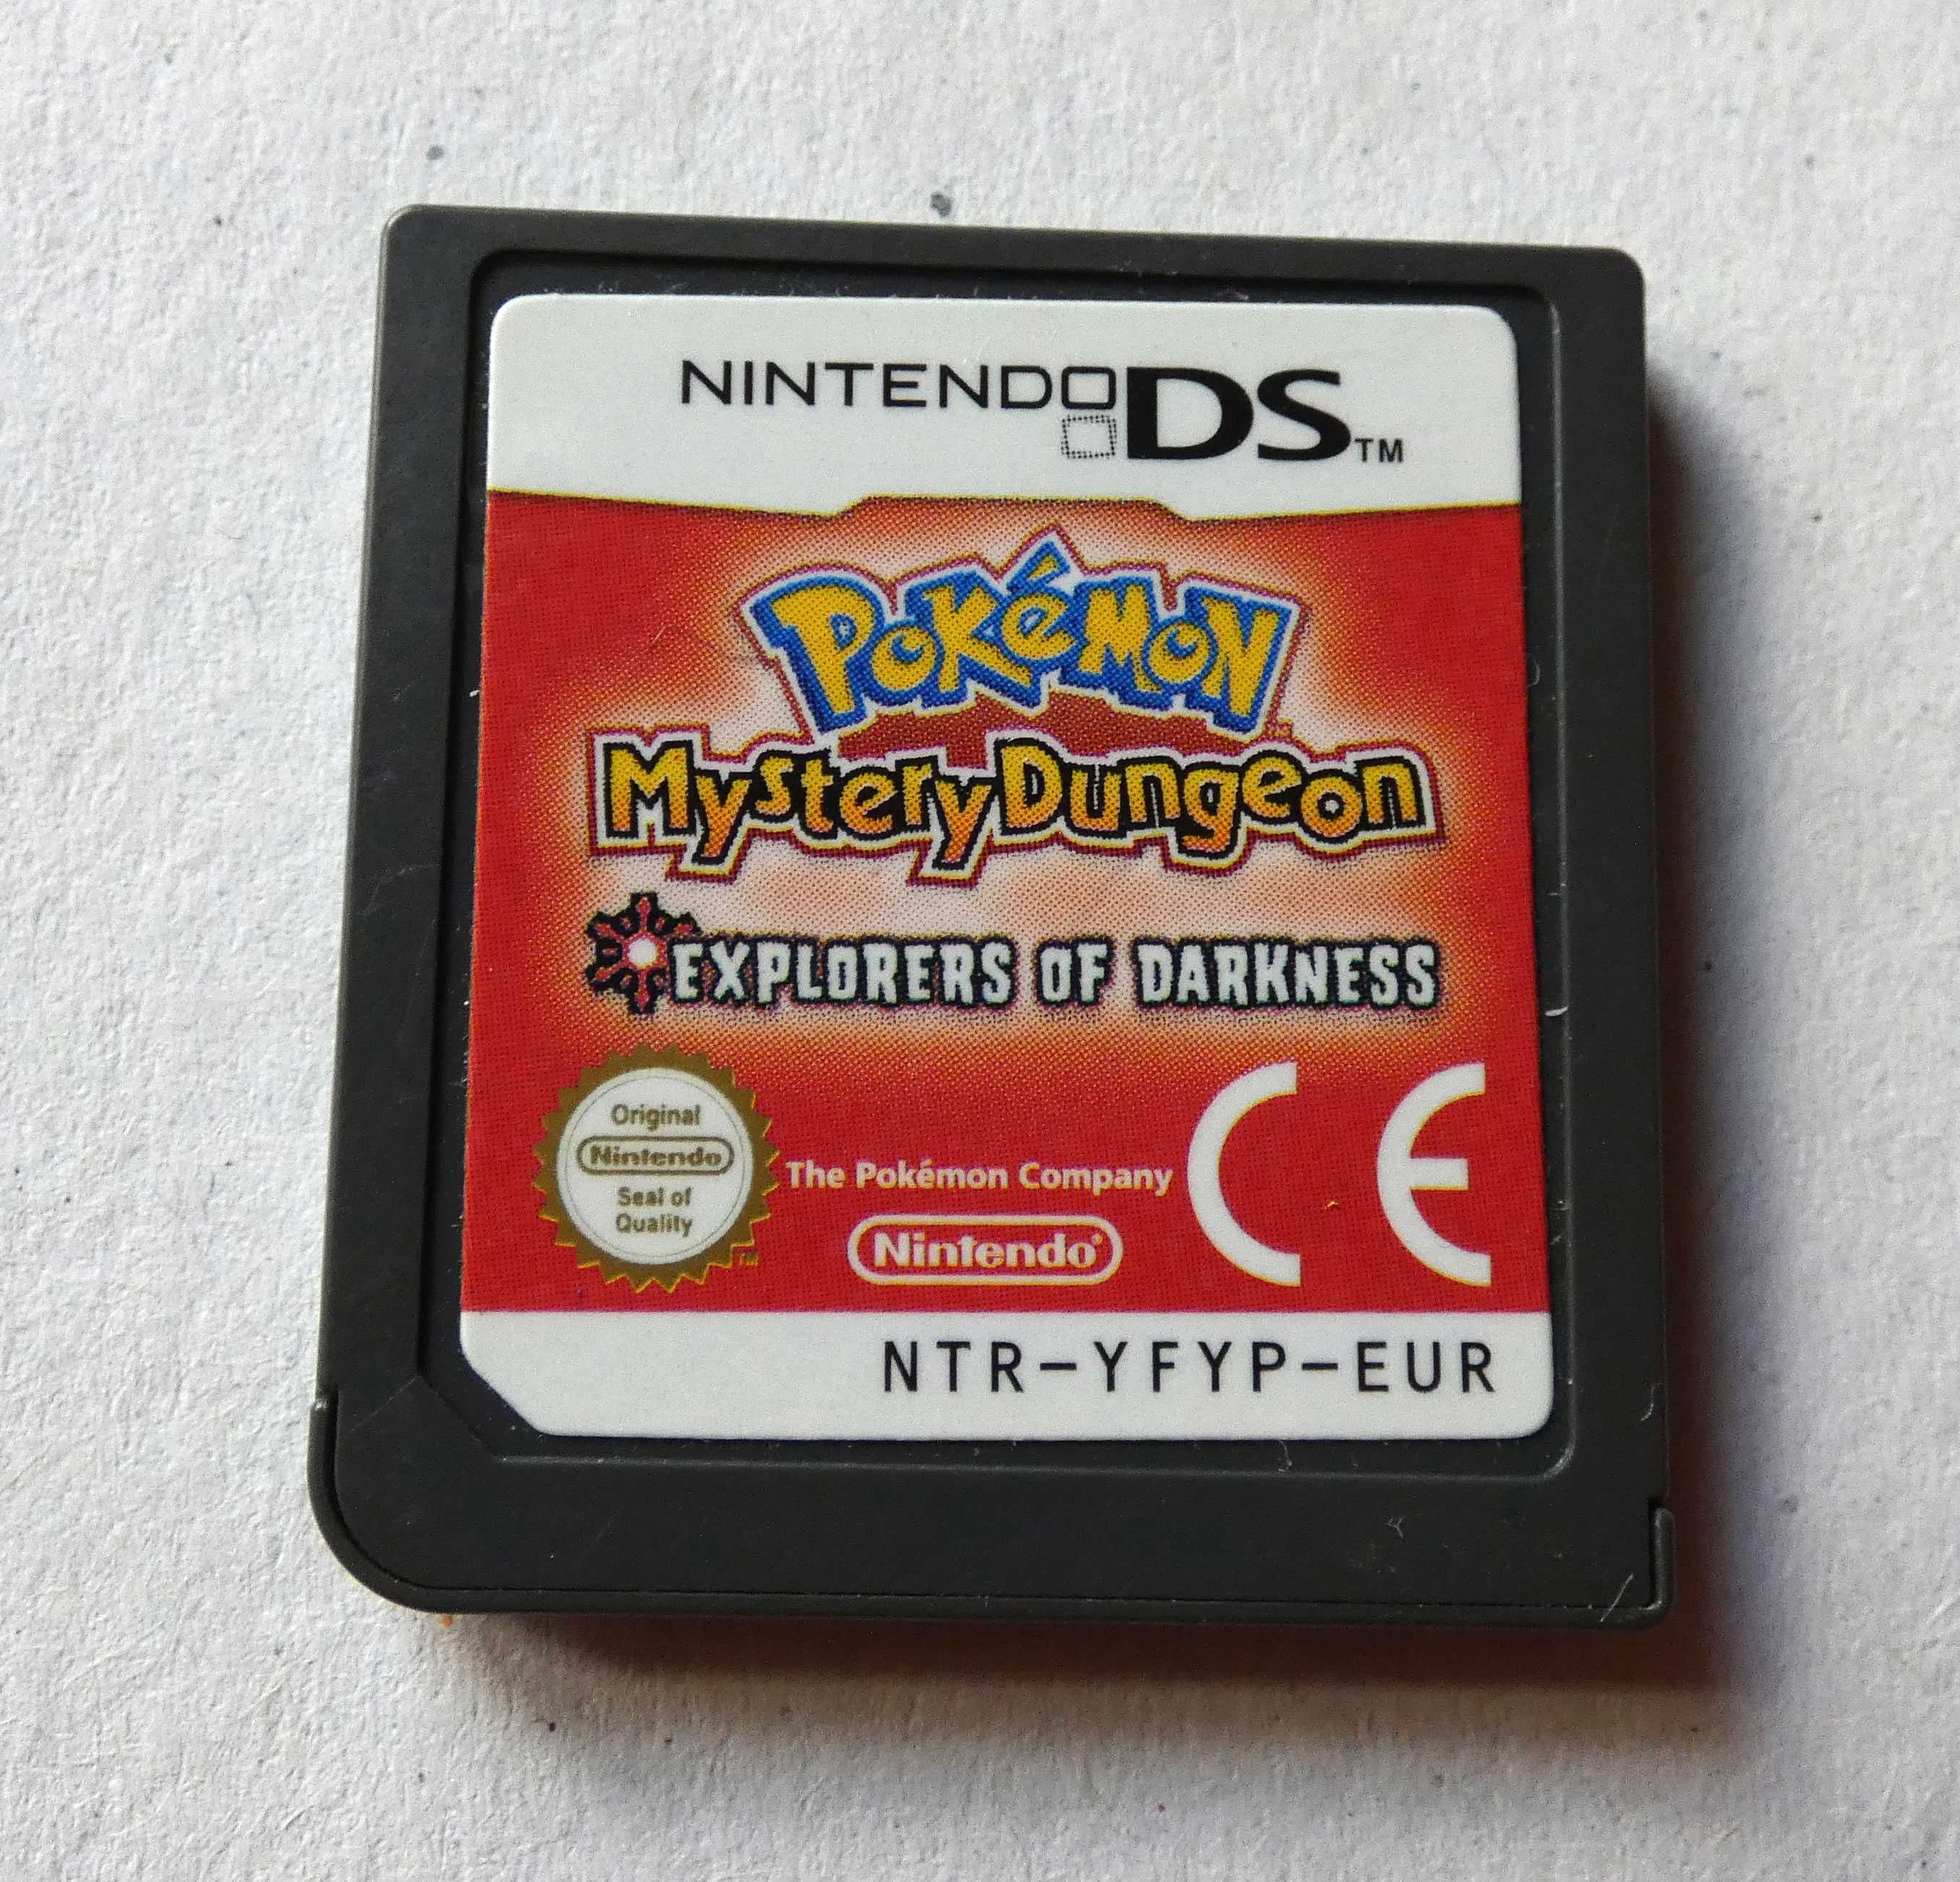 Картридж Pokemon Mystery Dungeon для Nintendo DS - оригинал